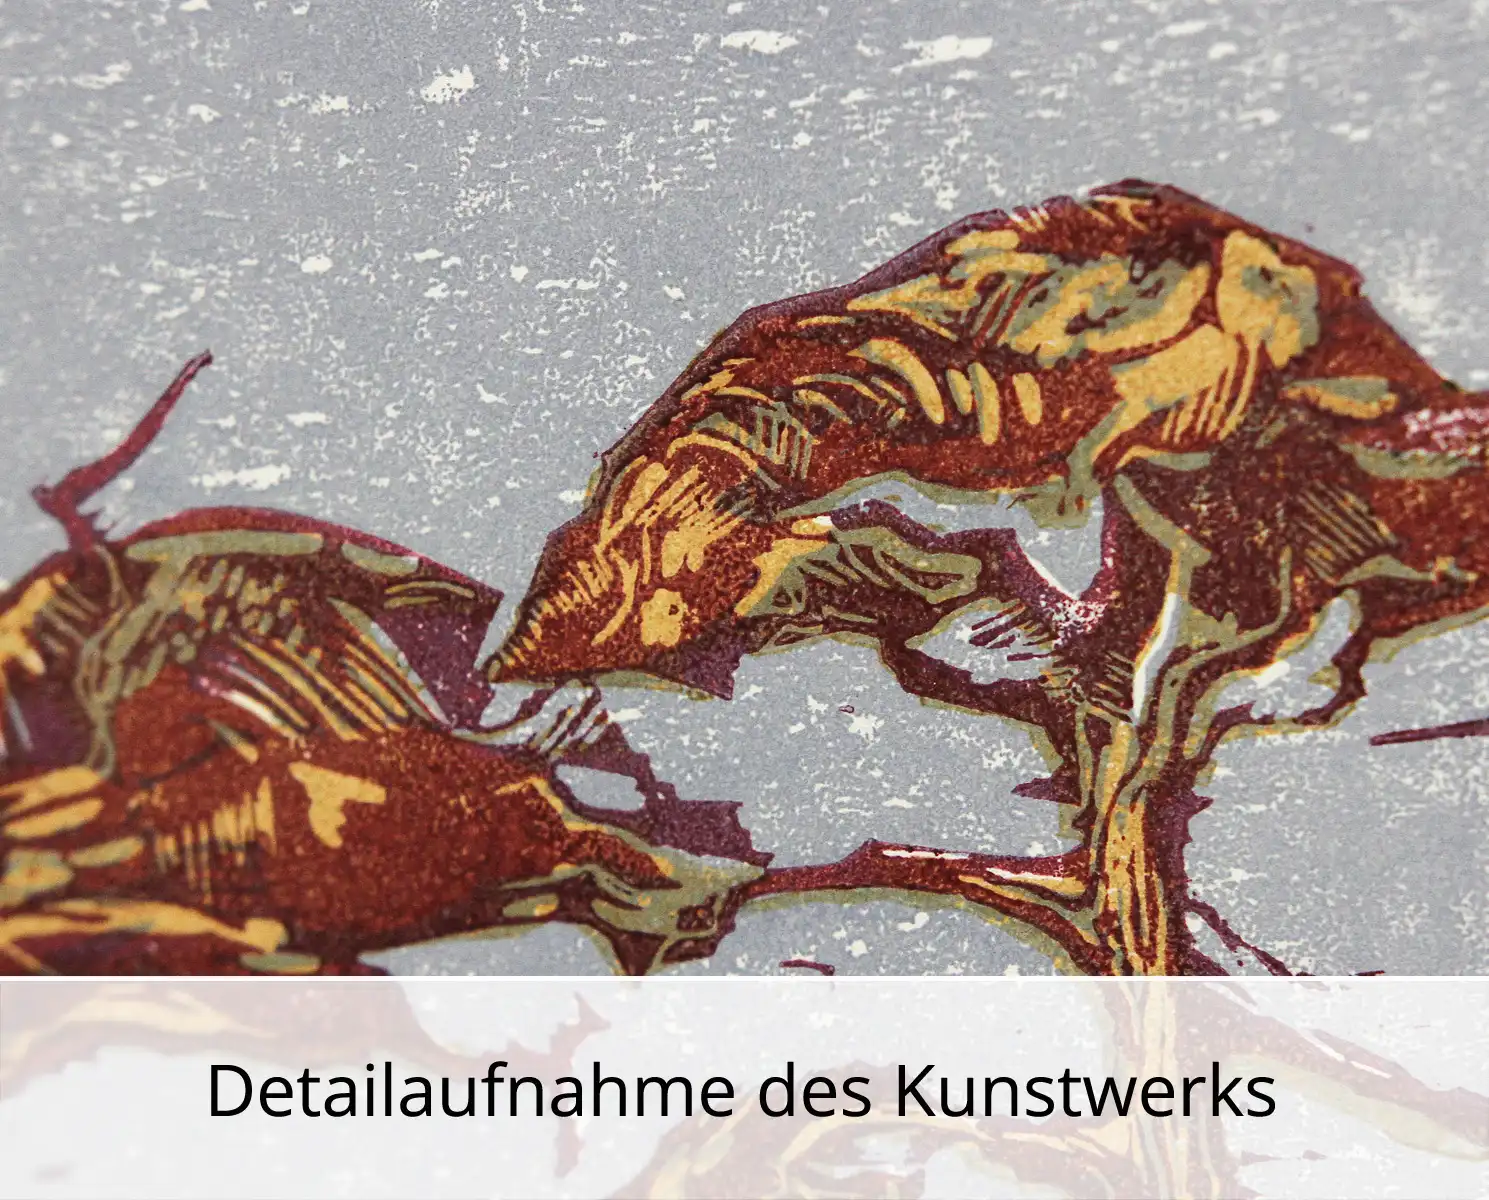 F.O. Haake: "Zwei Bäume, Nr. 6/20", originale Grafik/serielles Unikat, mehrfarbiger Linoldruck